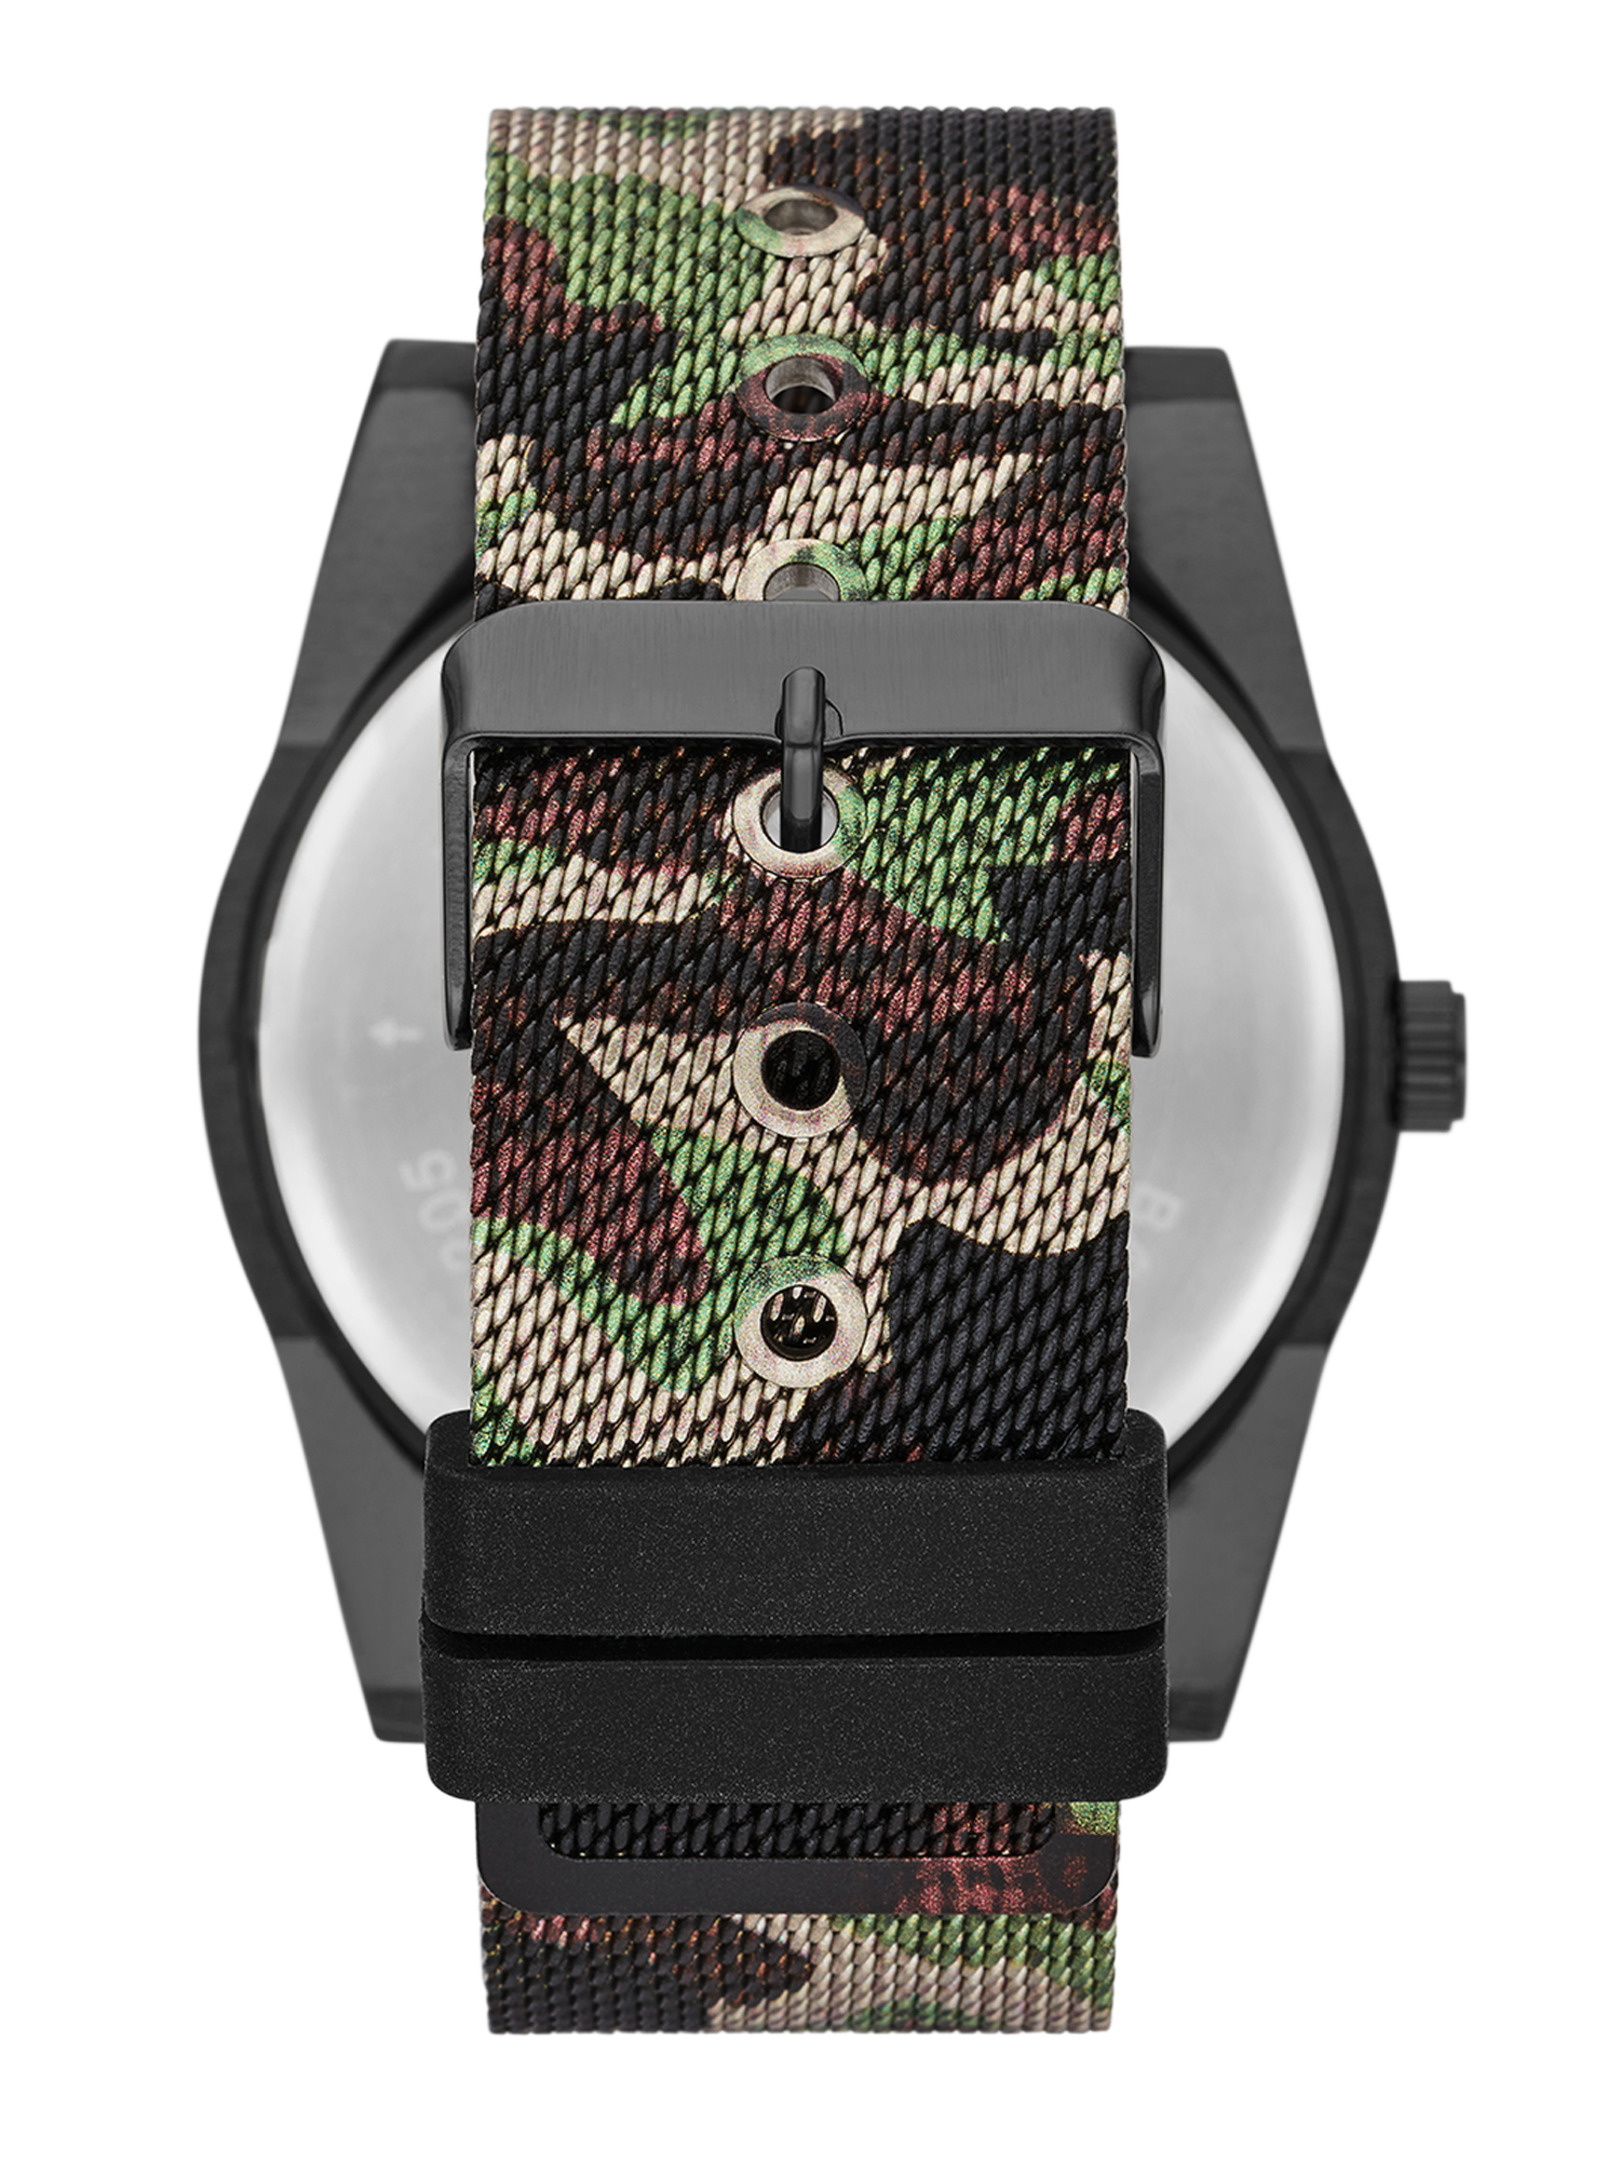 George Men's Watch Set: Gunmetal Tone Case, Black Dial, Camo Mesh Band, Brown Vegan Leather Double Strap (FMDXGE040) - image 2 of 4